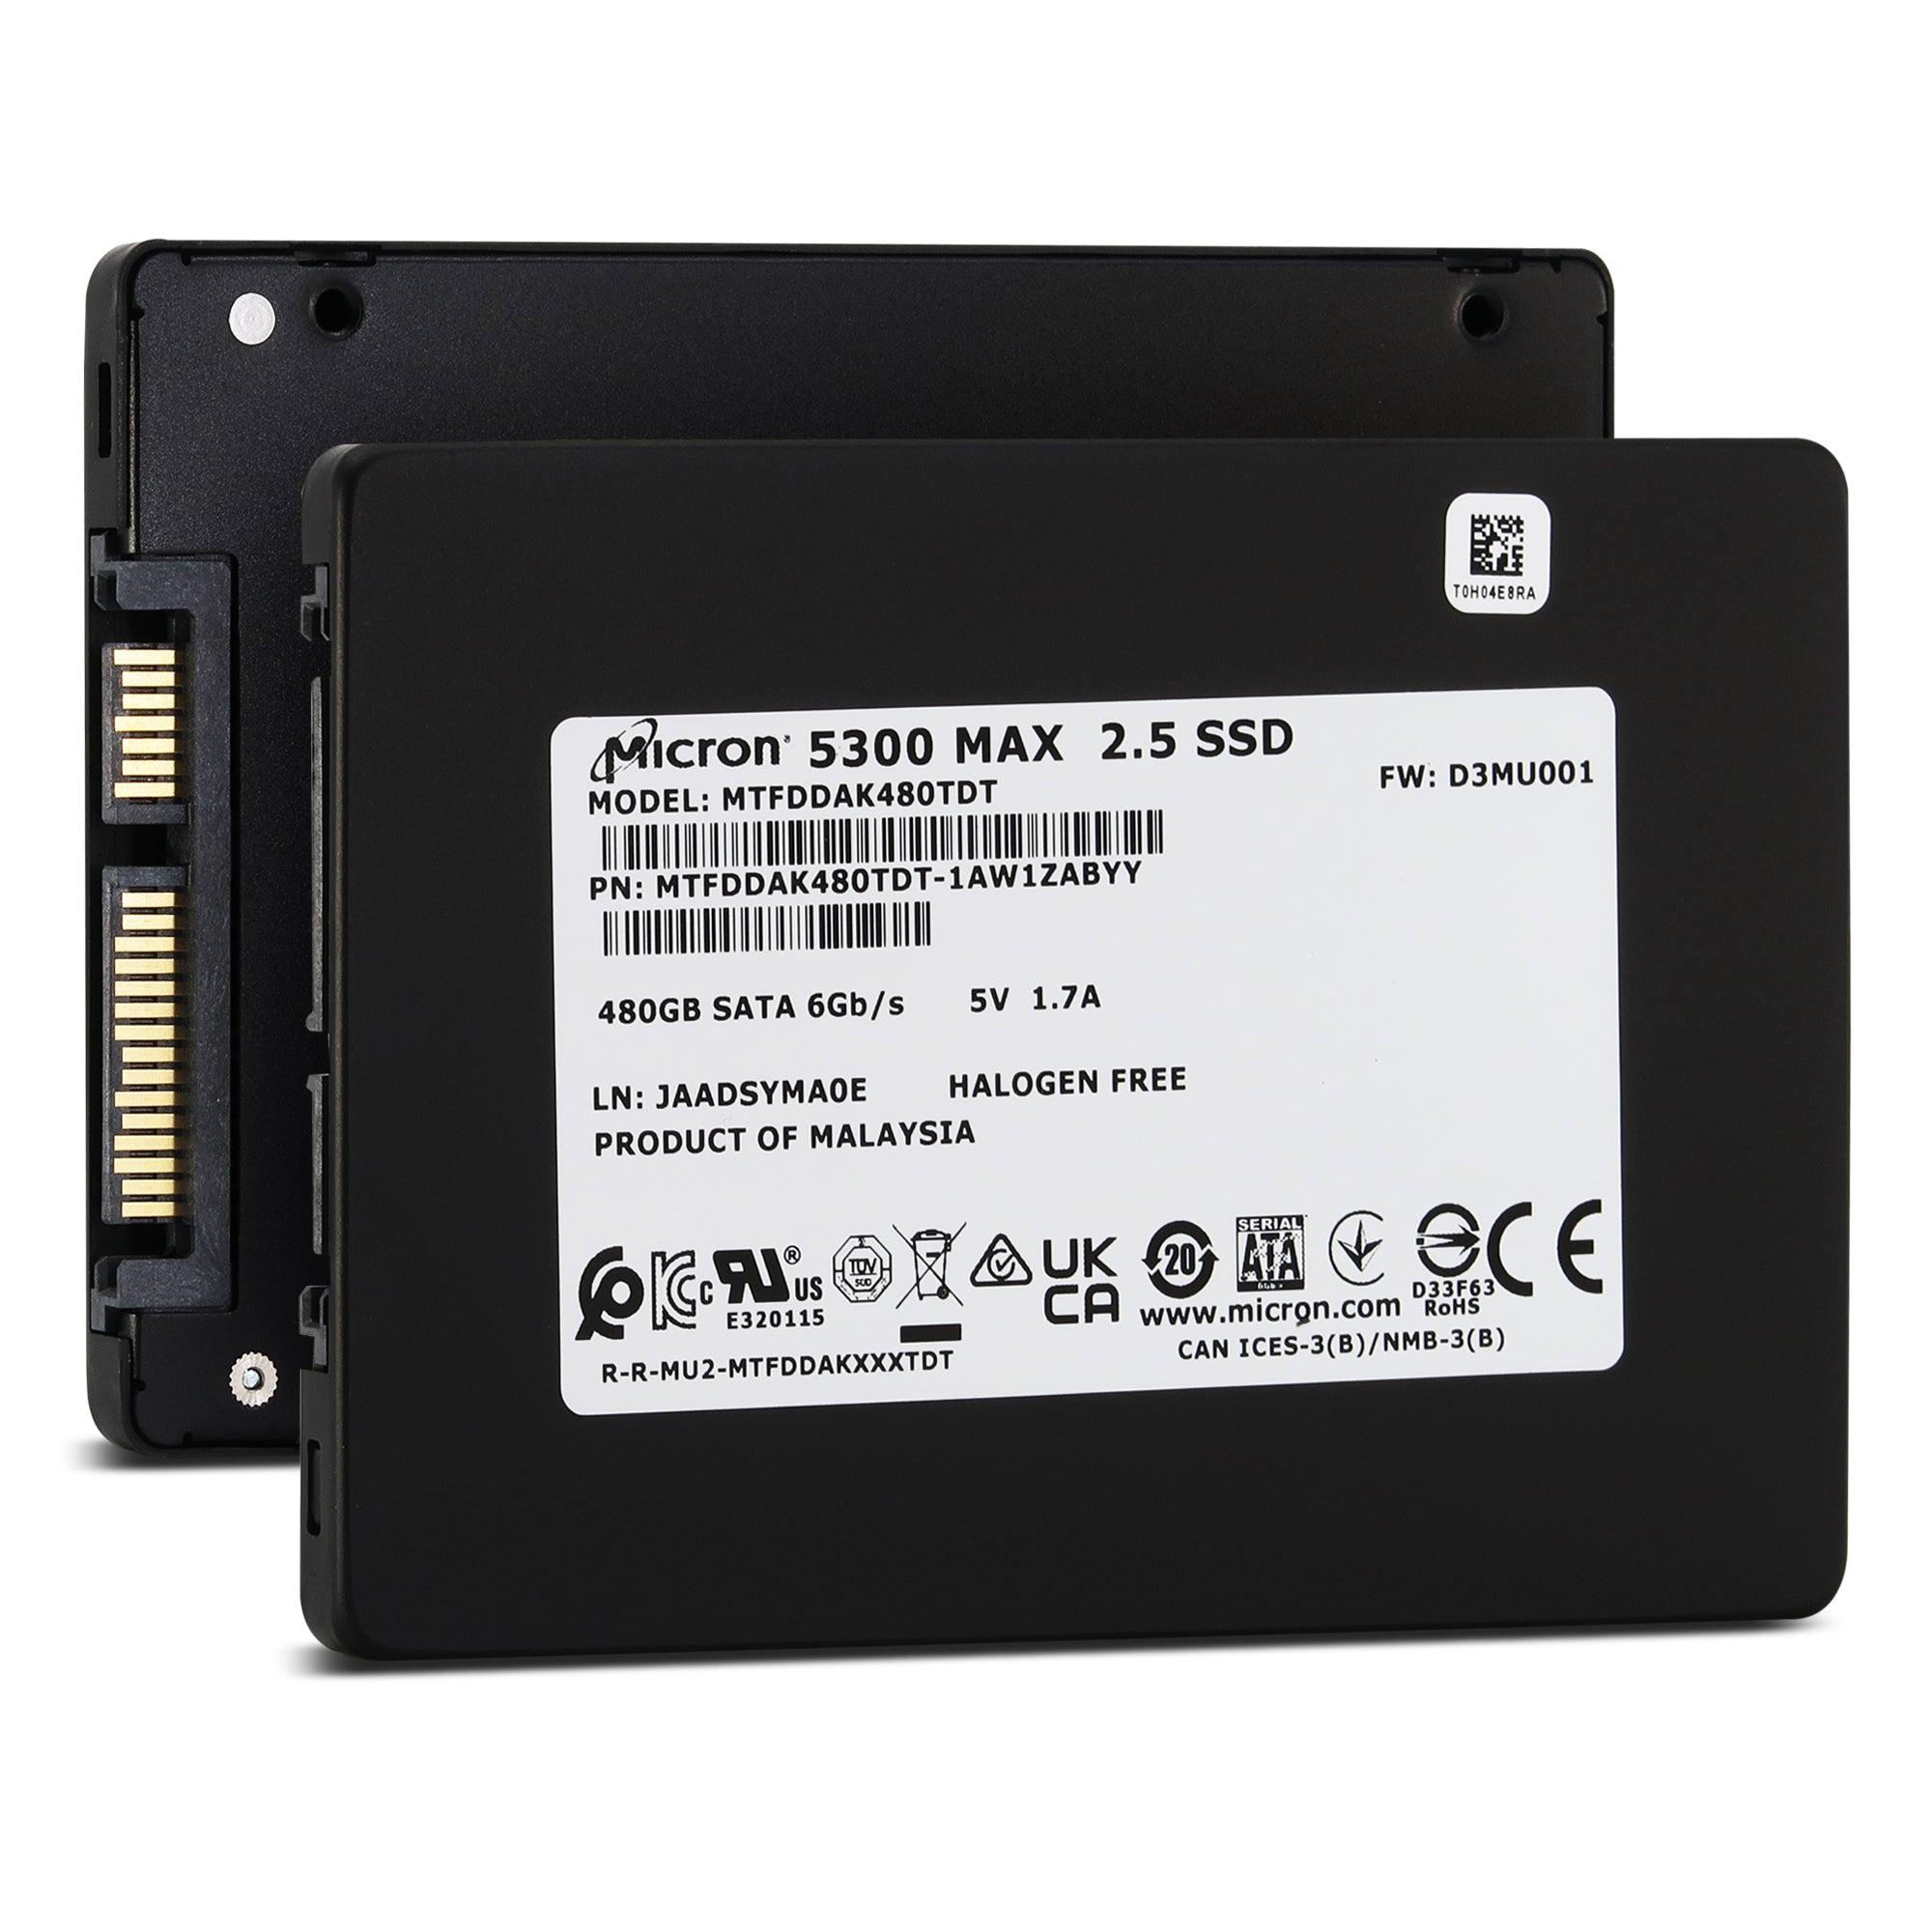 Micron 5300 MAX MTFDDAK480TDT-1AW1ZAB 480GB SATA 6Gb/s 2.5in Solid State Drive